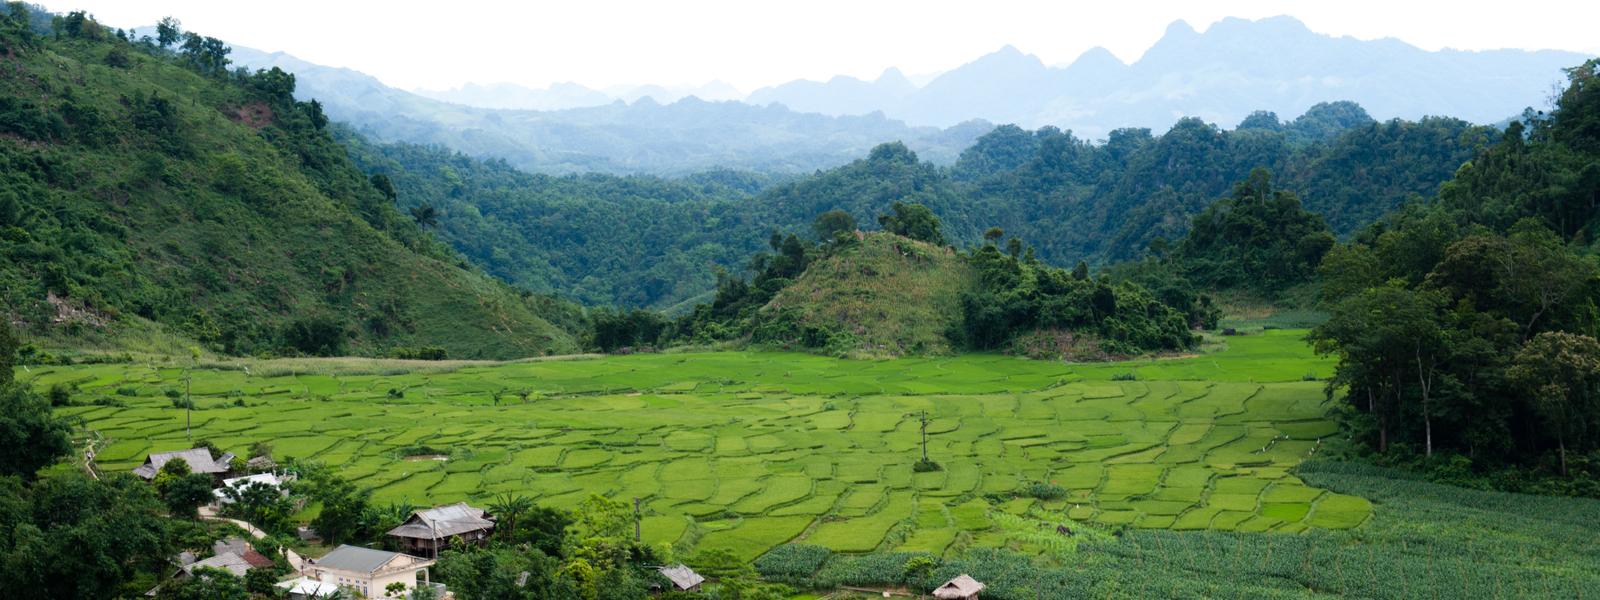 Vietnam hills